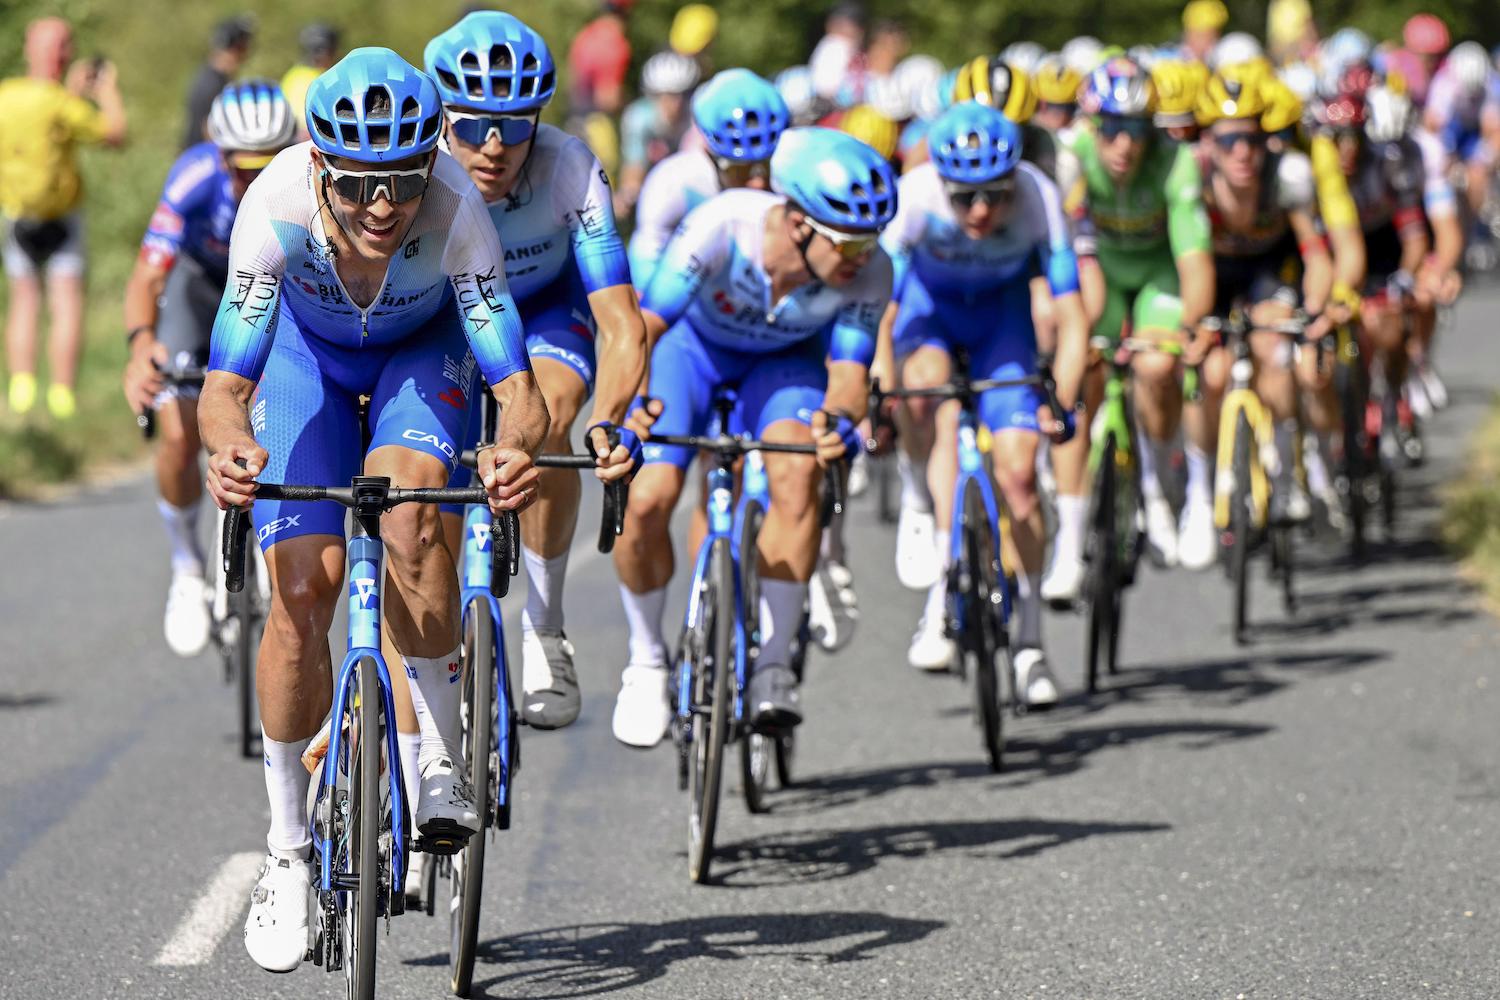 Team BikeExchangeJayco Wraps up Winning Tour de France Effort! Giant